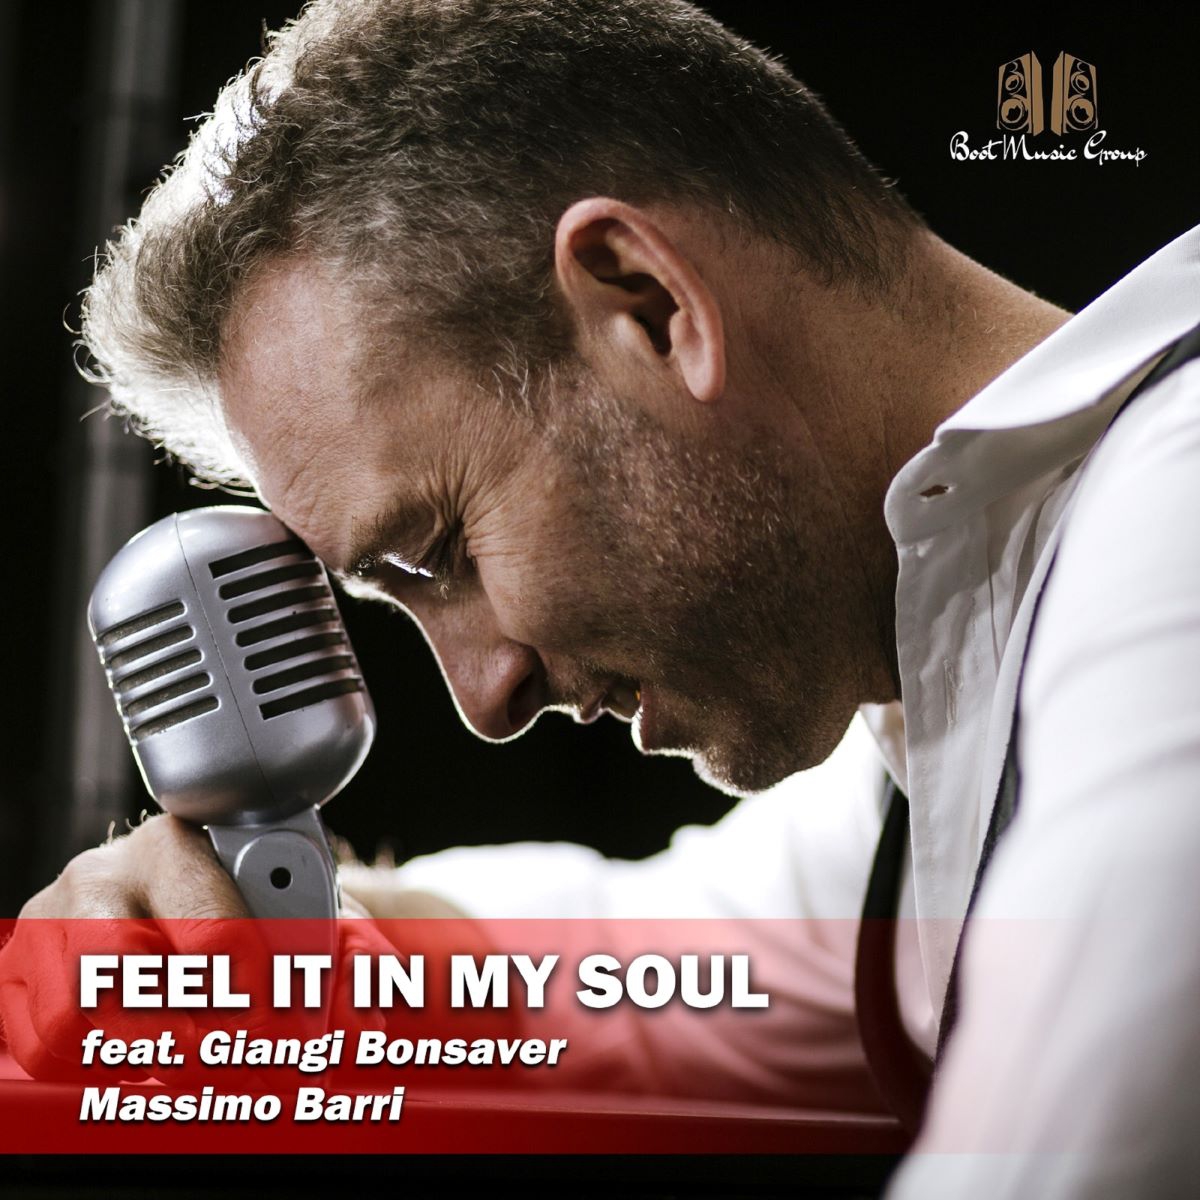 Massimo Barri feat. Giangi Bonsaver - “Feel it in my soul”